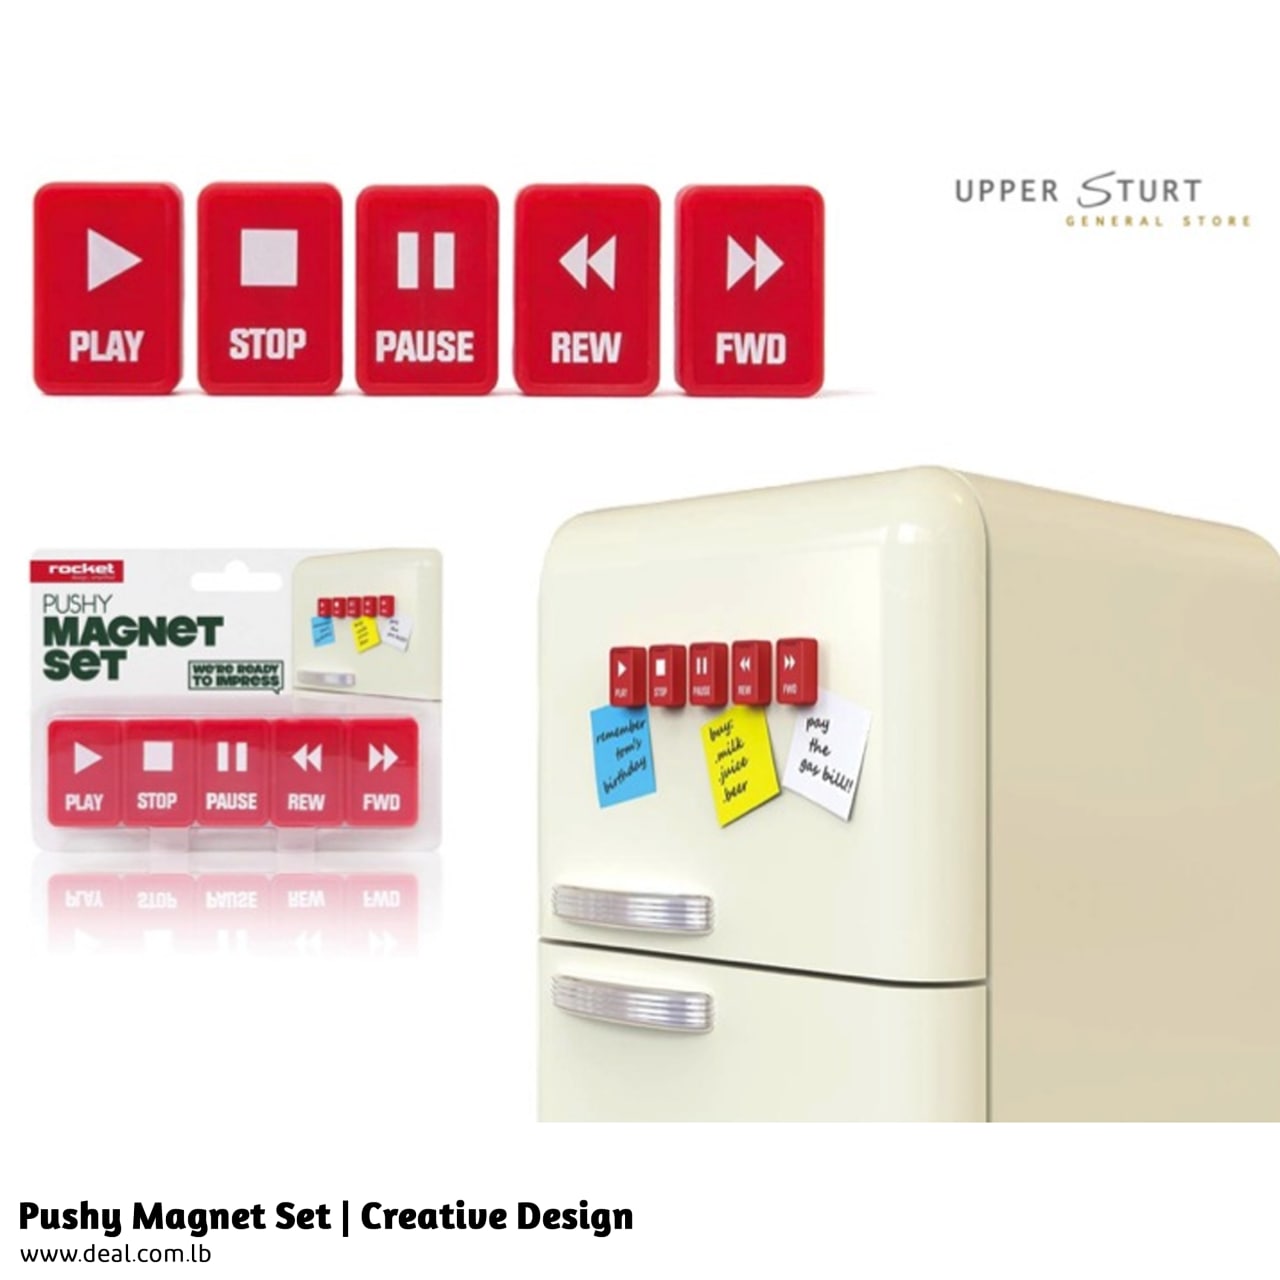 Pushy+Magnet+Set+%7C+Creative+Design